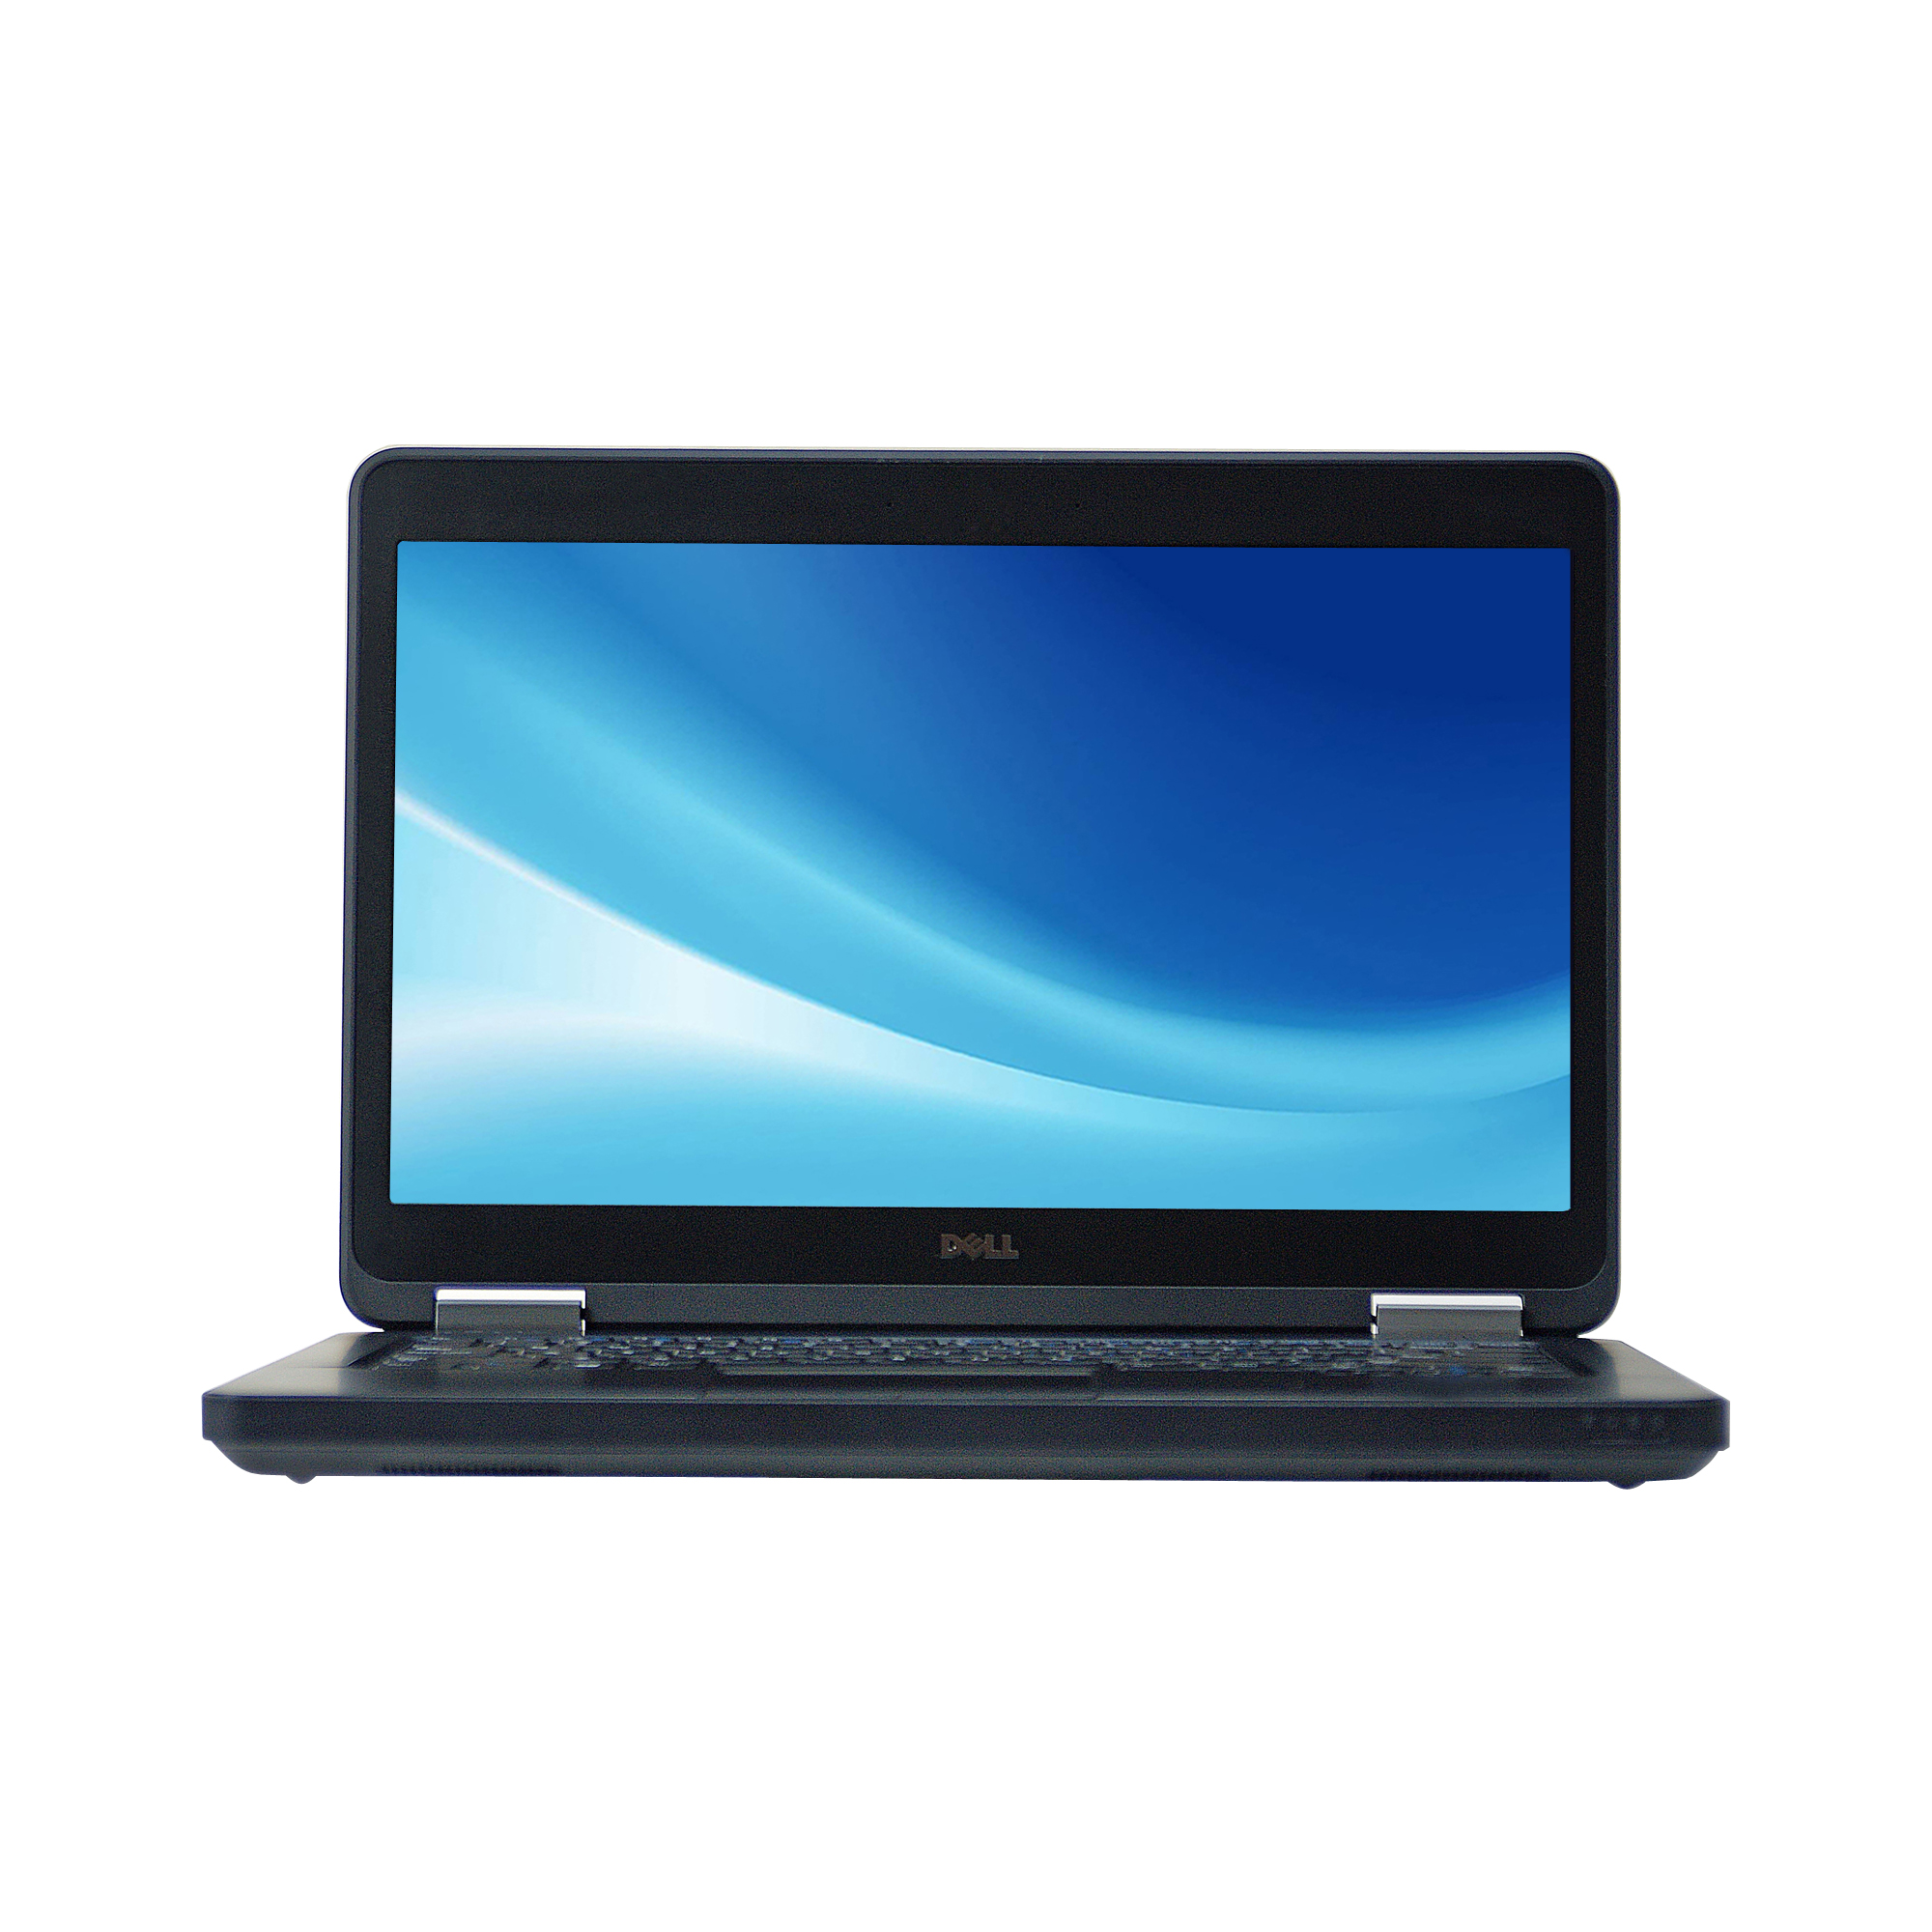 Restored Dell E5440 Laptop, 14'', Intel Core i5-4210U 1.7GHz Processor, 4GB Memory, 1TB Hard Drive, DVDRW, Windows 10 Pro 64-bit, WA5-31193 (Refurbished) - image 2 of 4